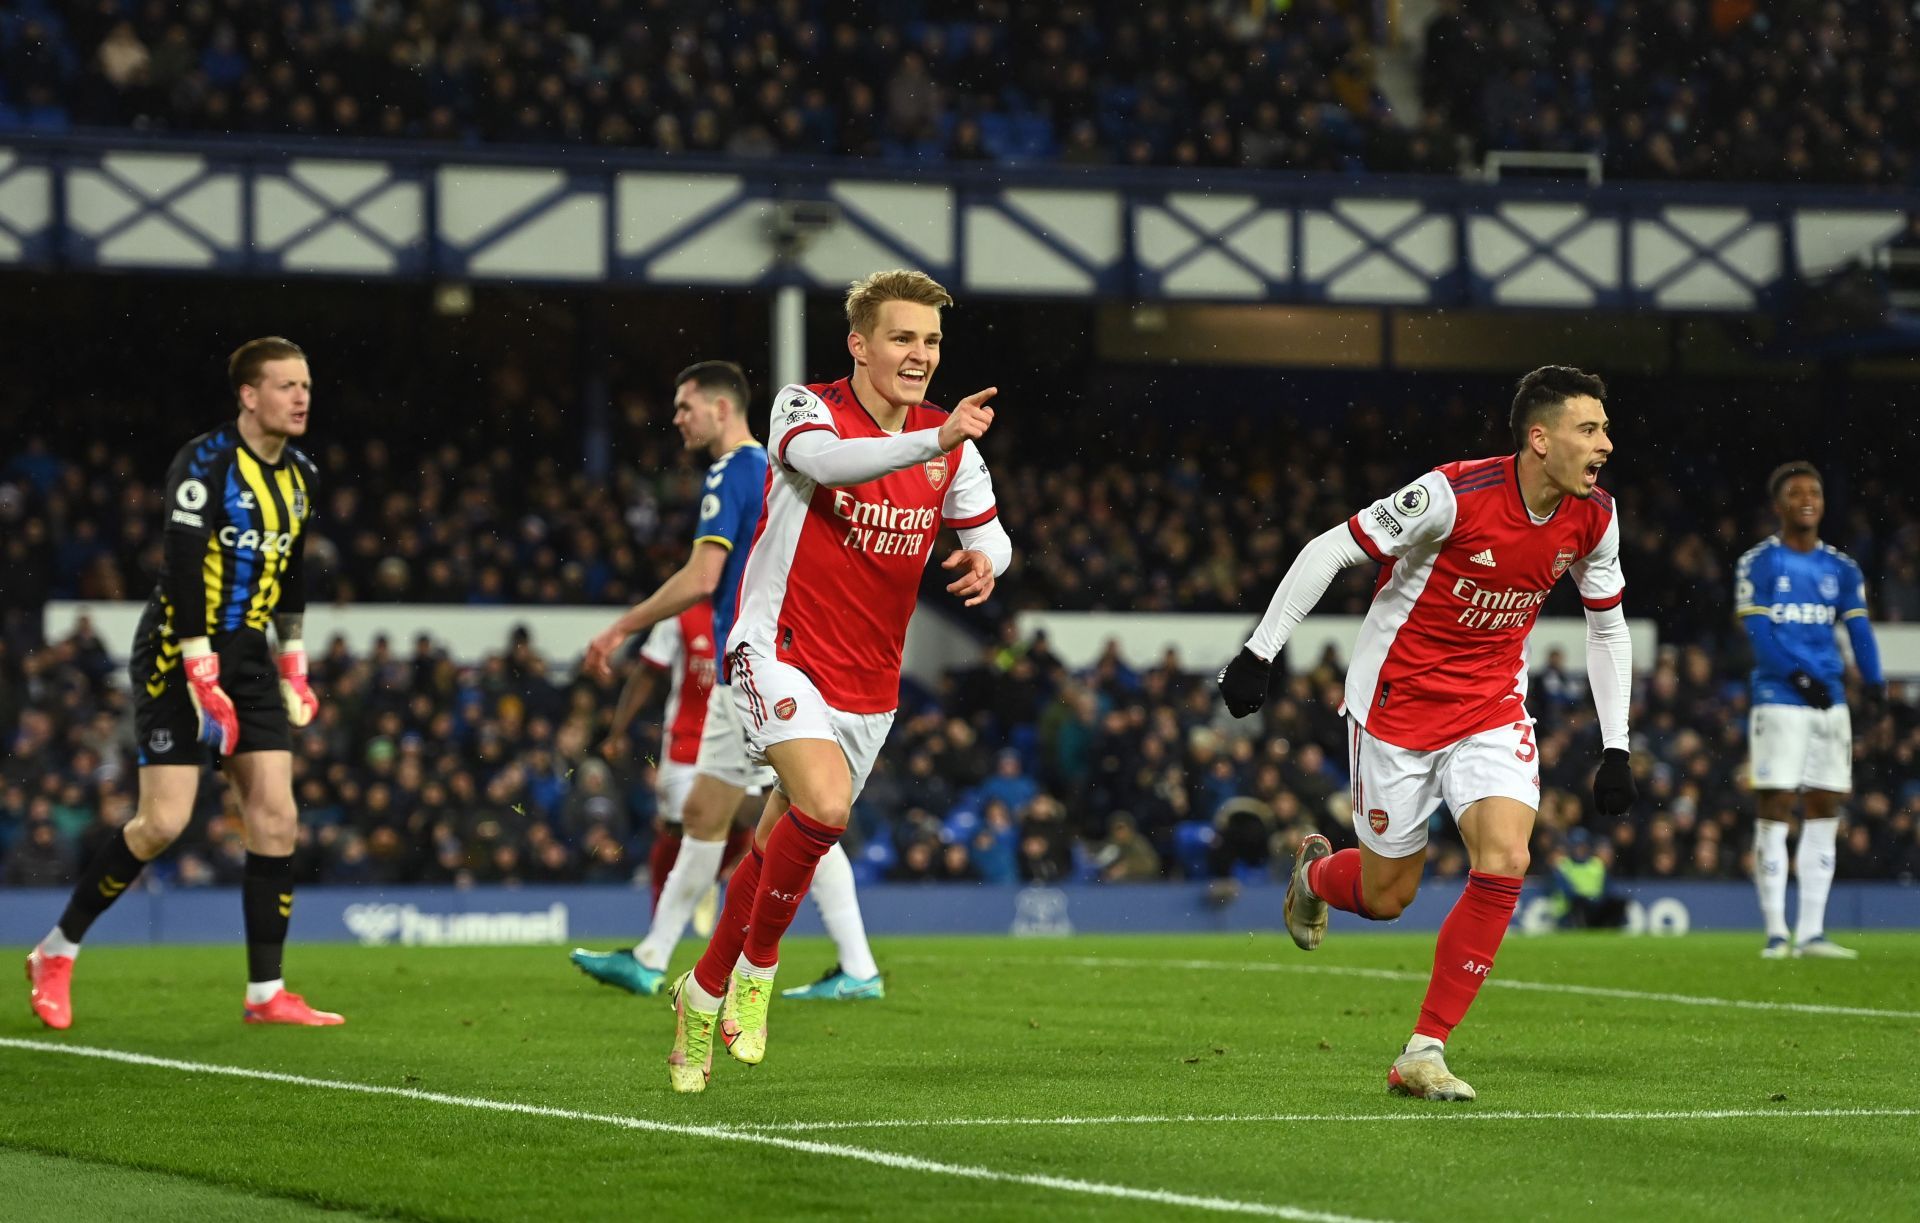 Martin Odegaard scored the opening goal for Arsenal against Everton